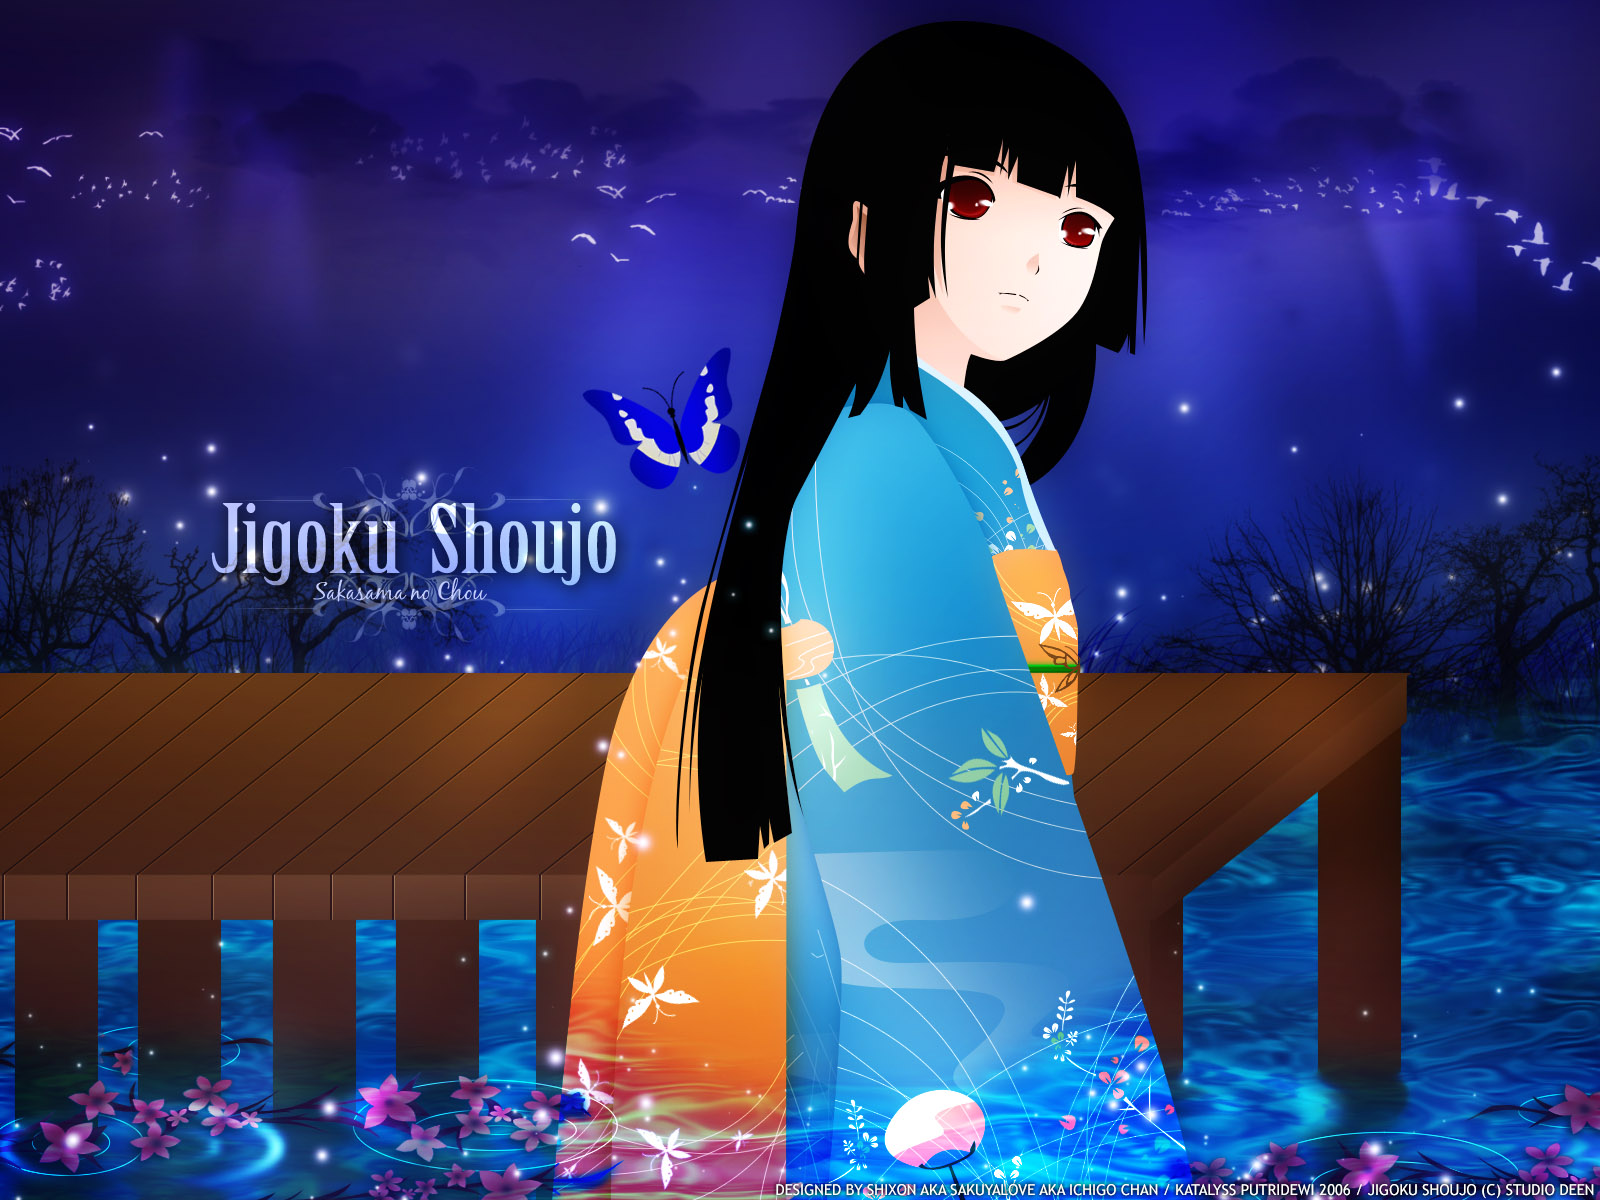 fond d'écran jigoku shoujo,anime,cheveux noirs,ciel,oeuvre de cg,animation